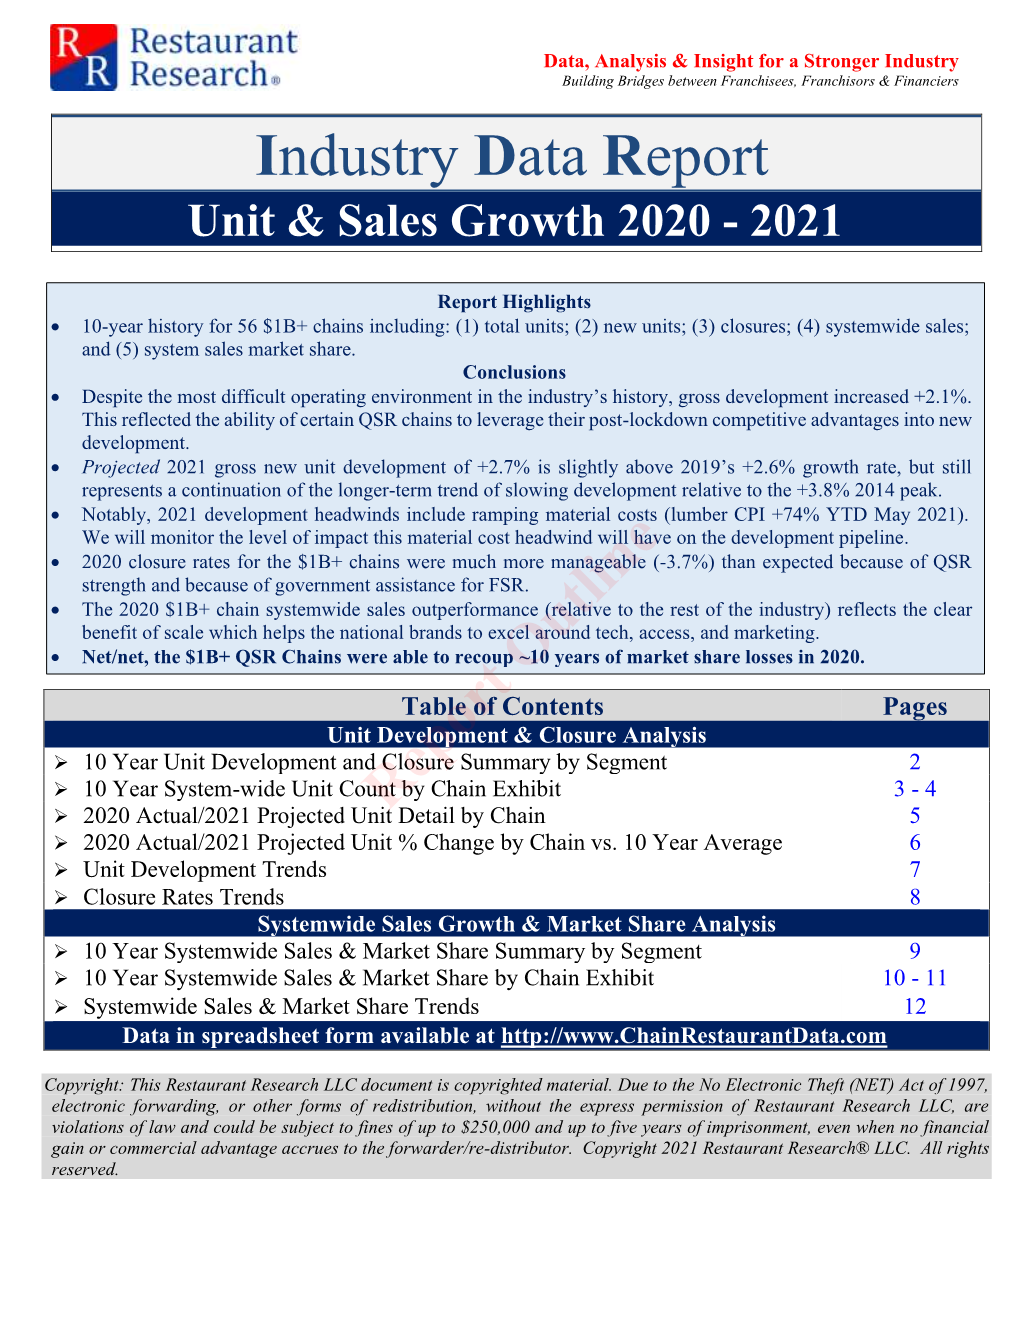 IDR Unit & Sales Growth Analysis 2021